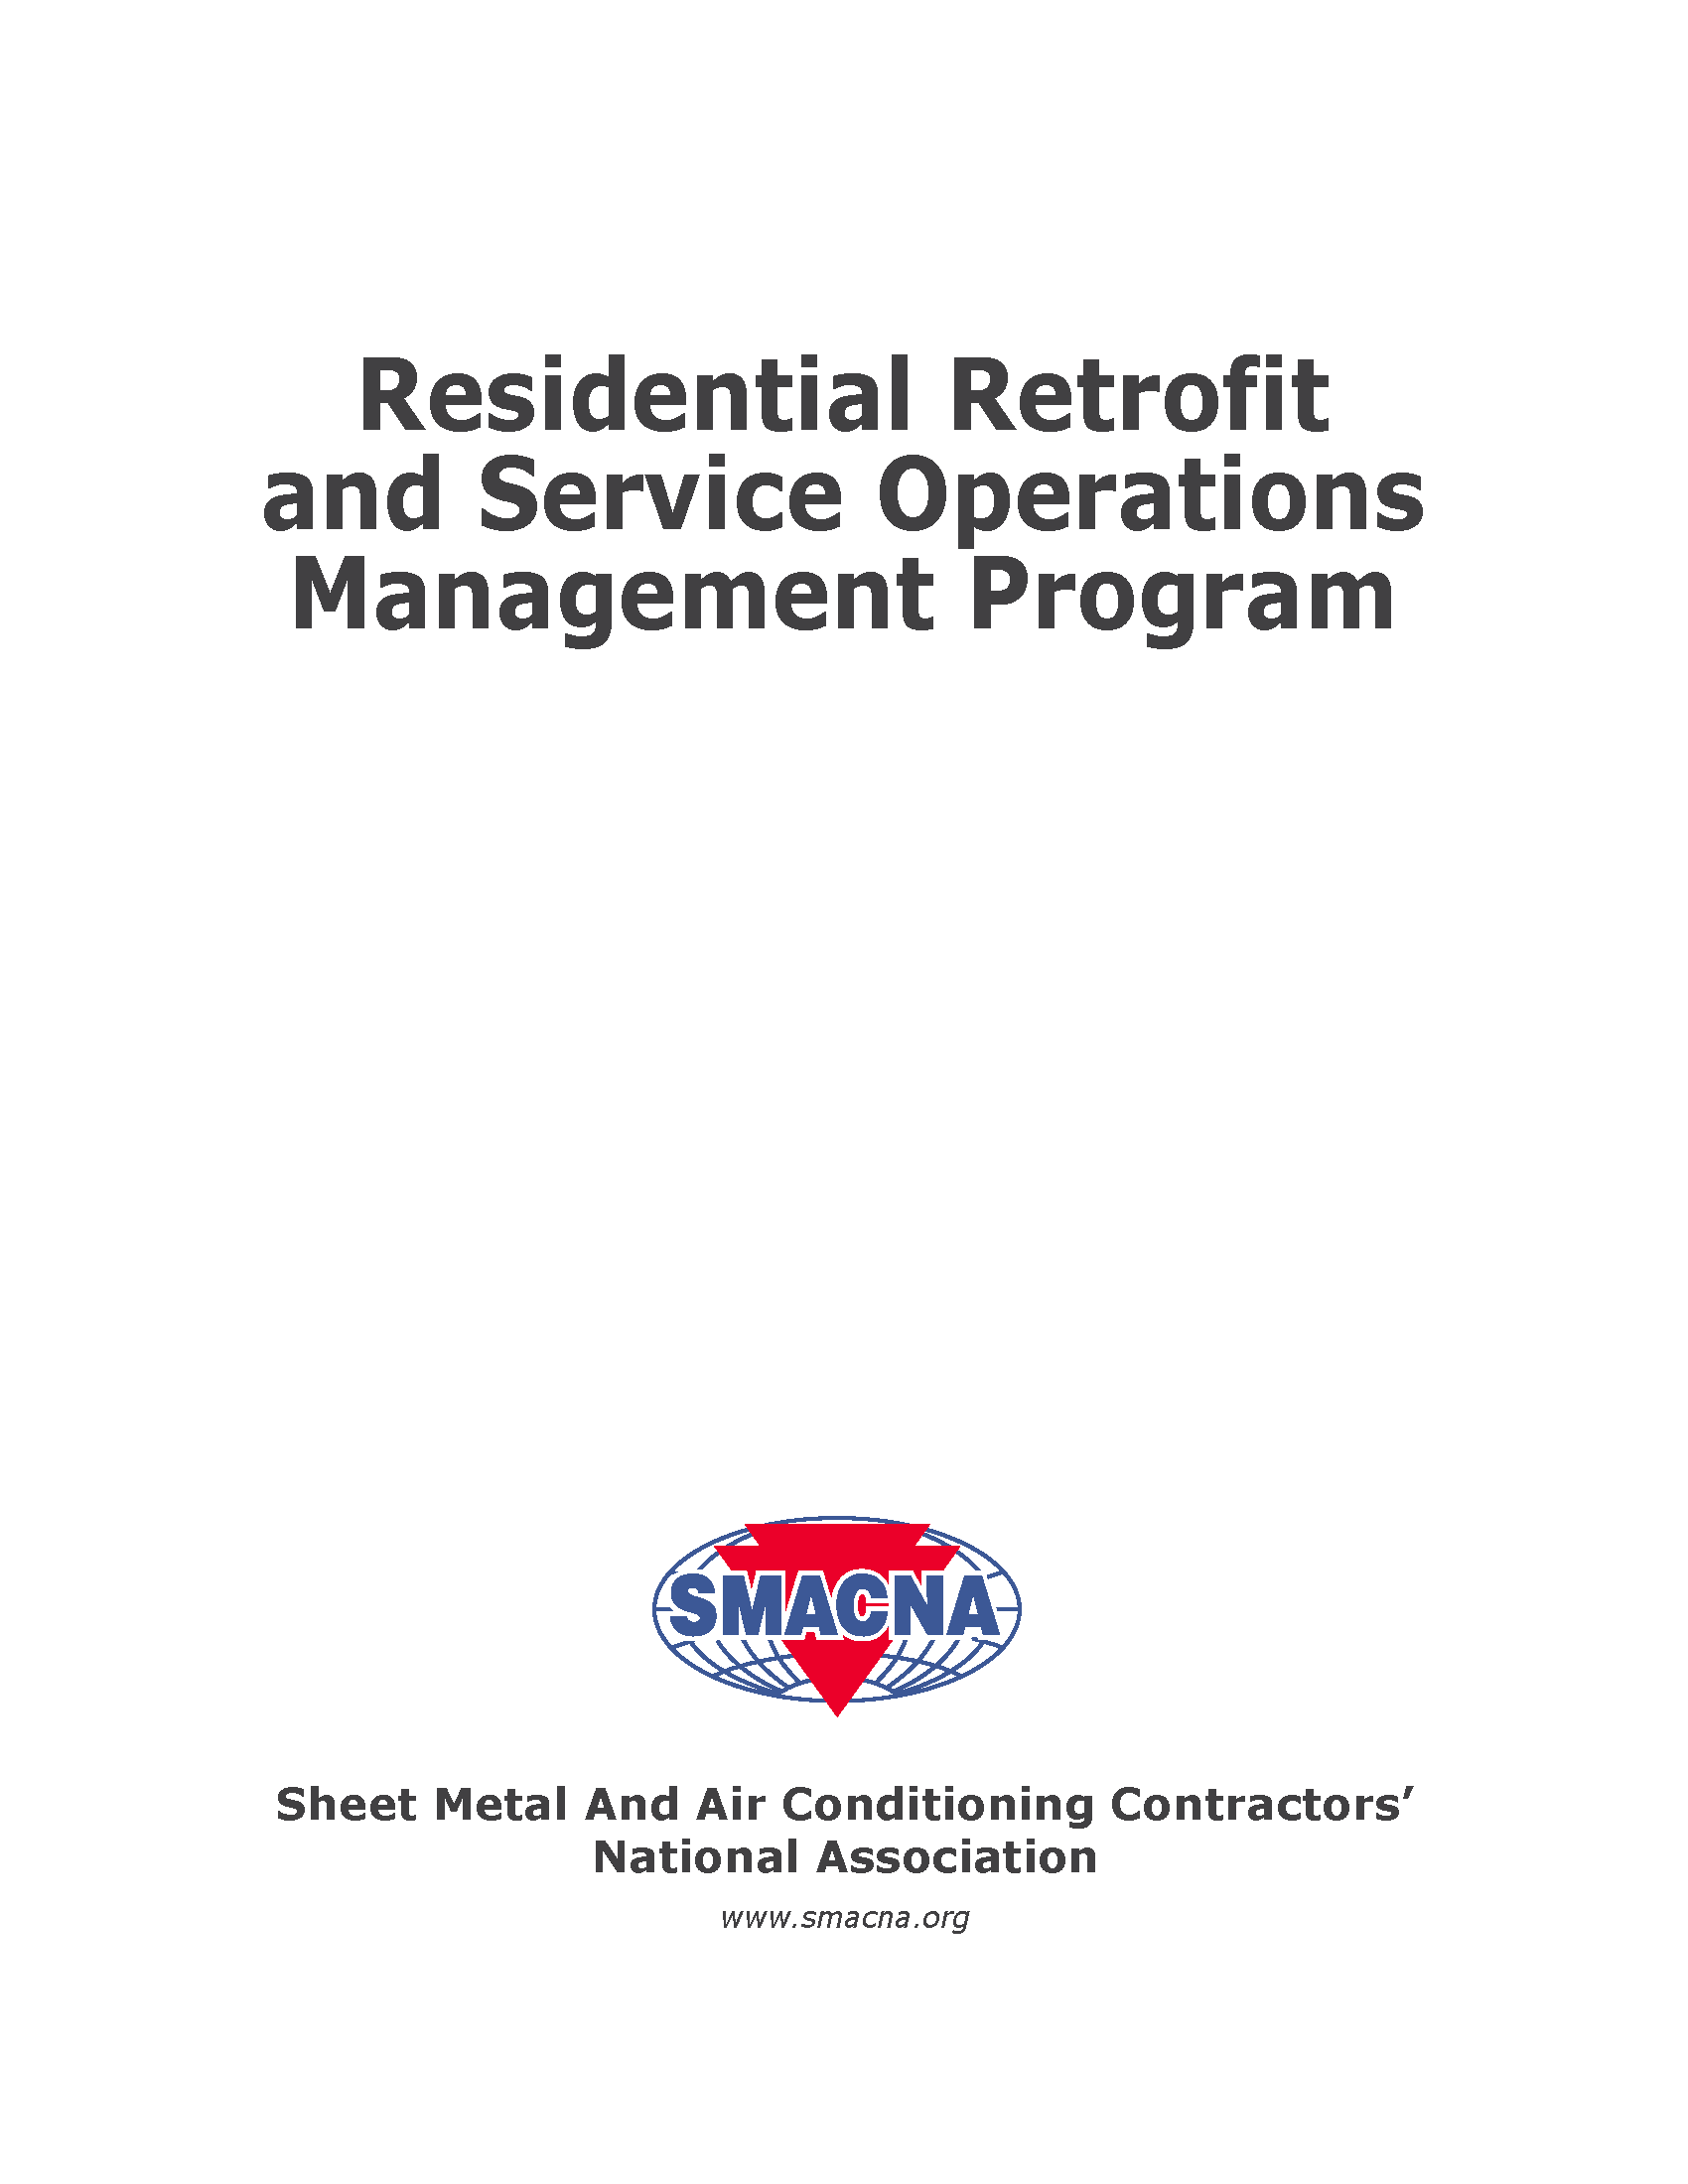 Residential Retrofit & Service Operations Management Program